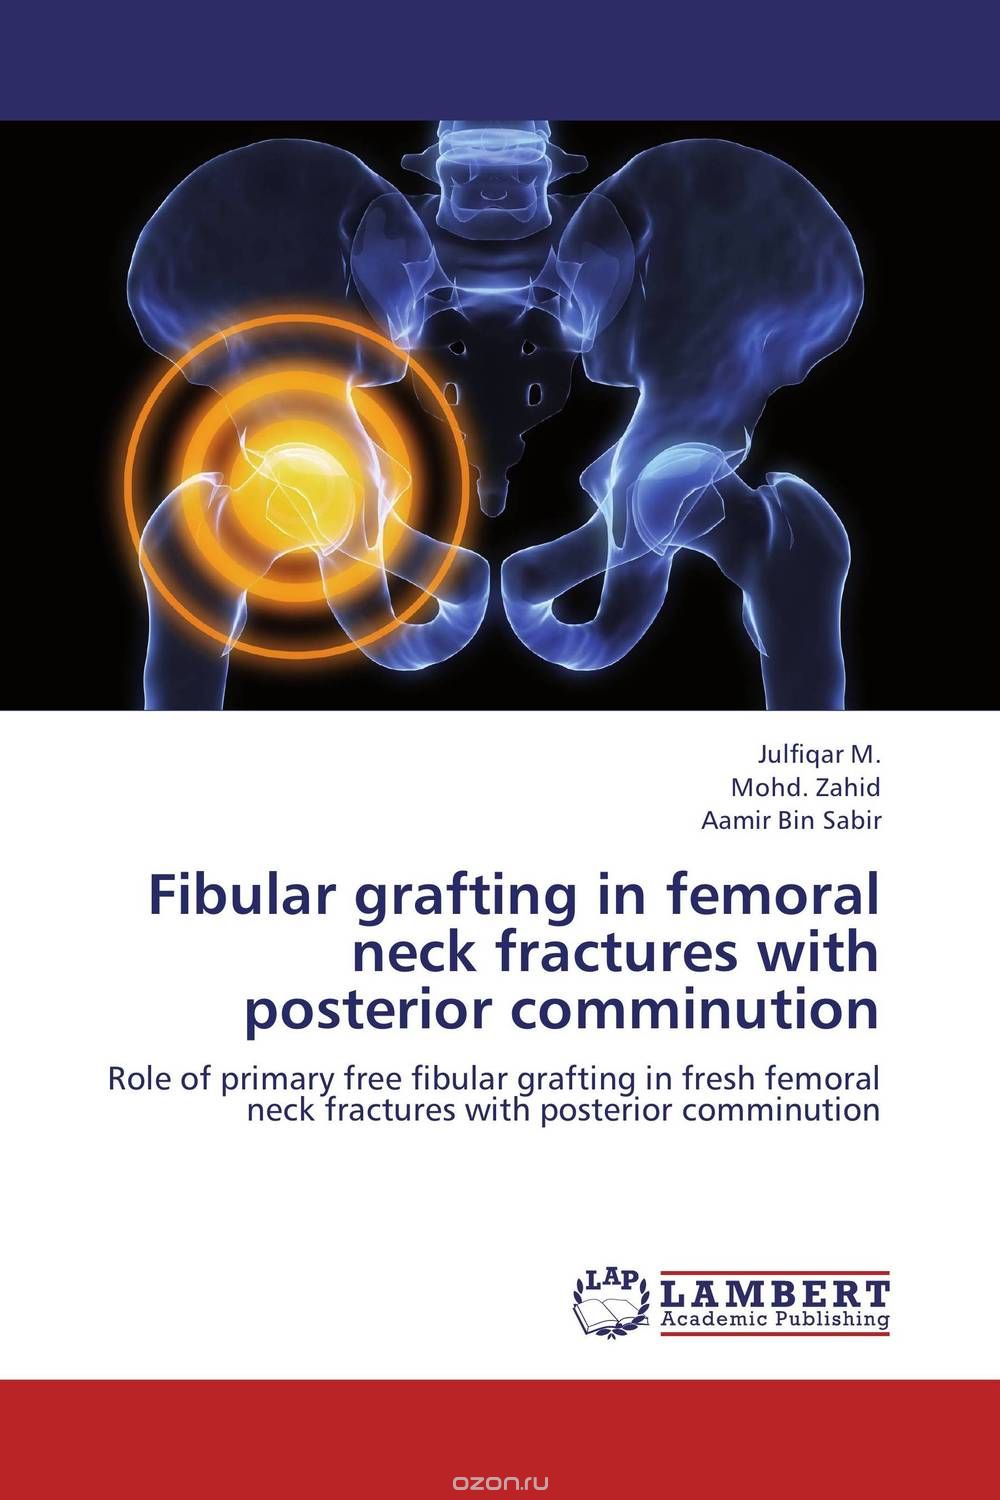 Скачать книгу "Fibular grafting in femoral neck fractures with posterior comminution"